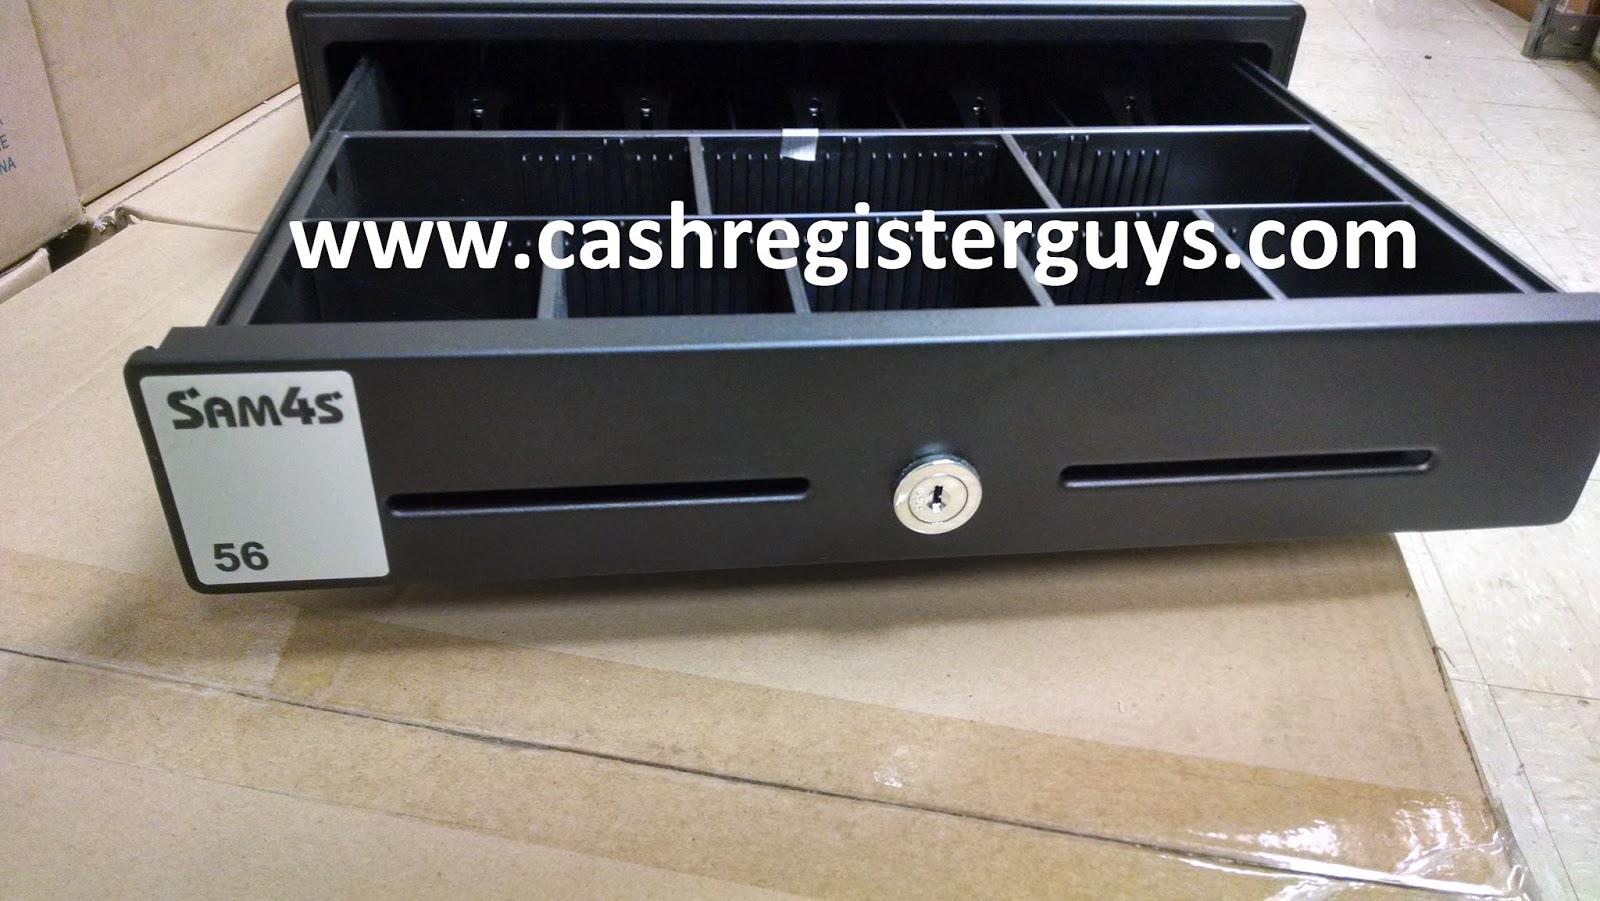 SAM4s SPS-520FT cash drawer